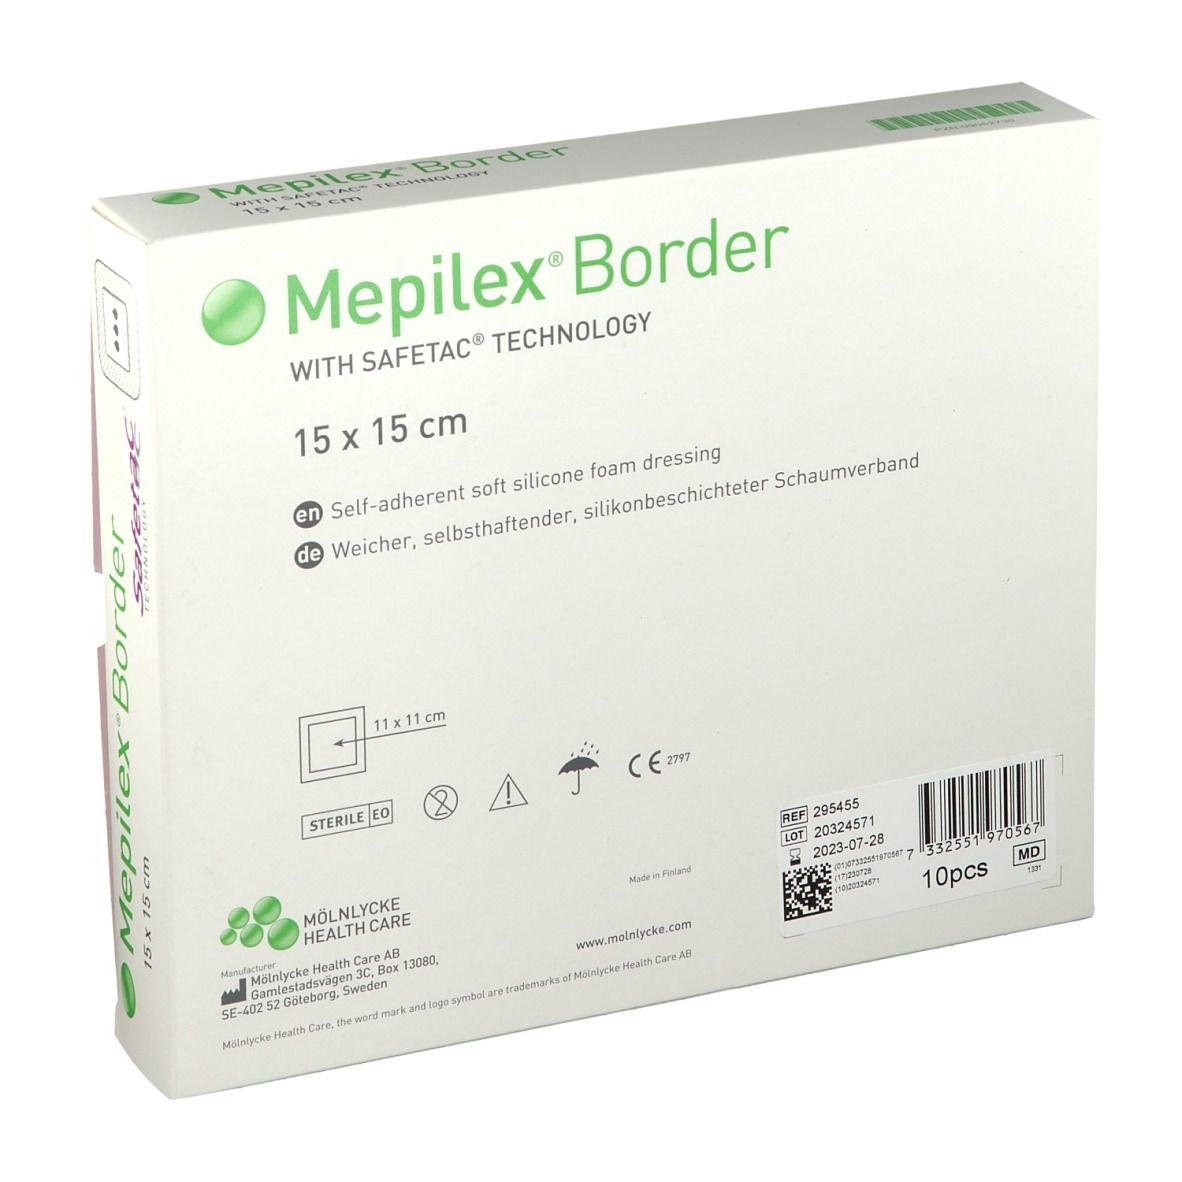 Mepilex® Border Schaumverband 15 x 15 cm